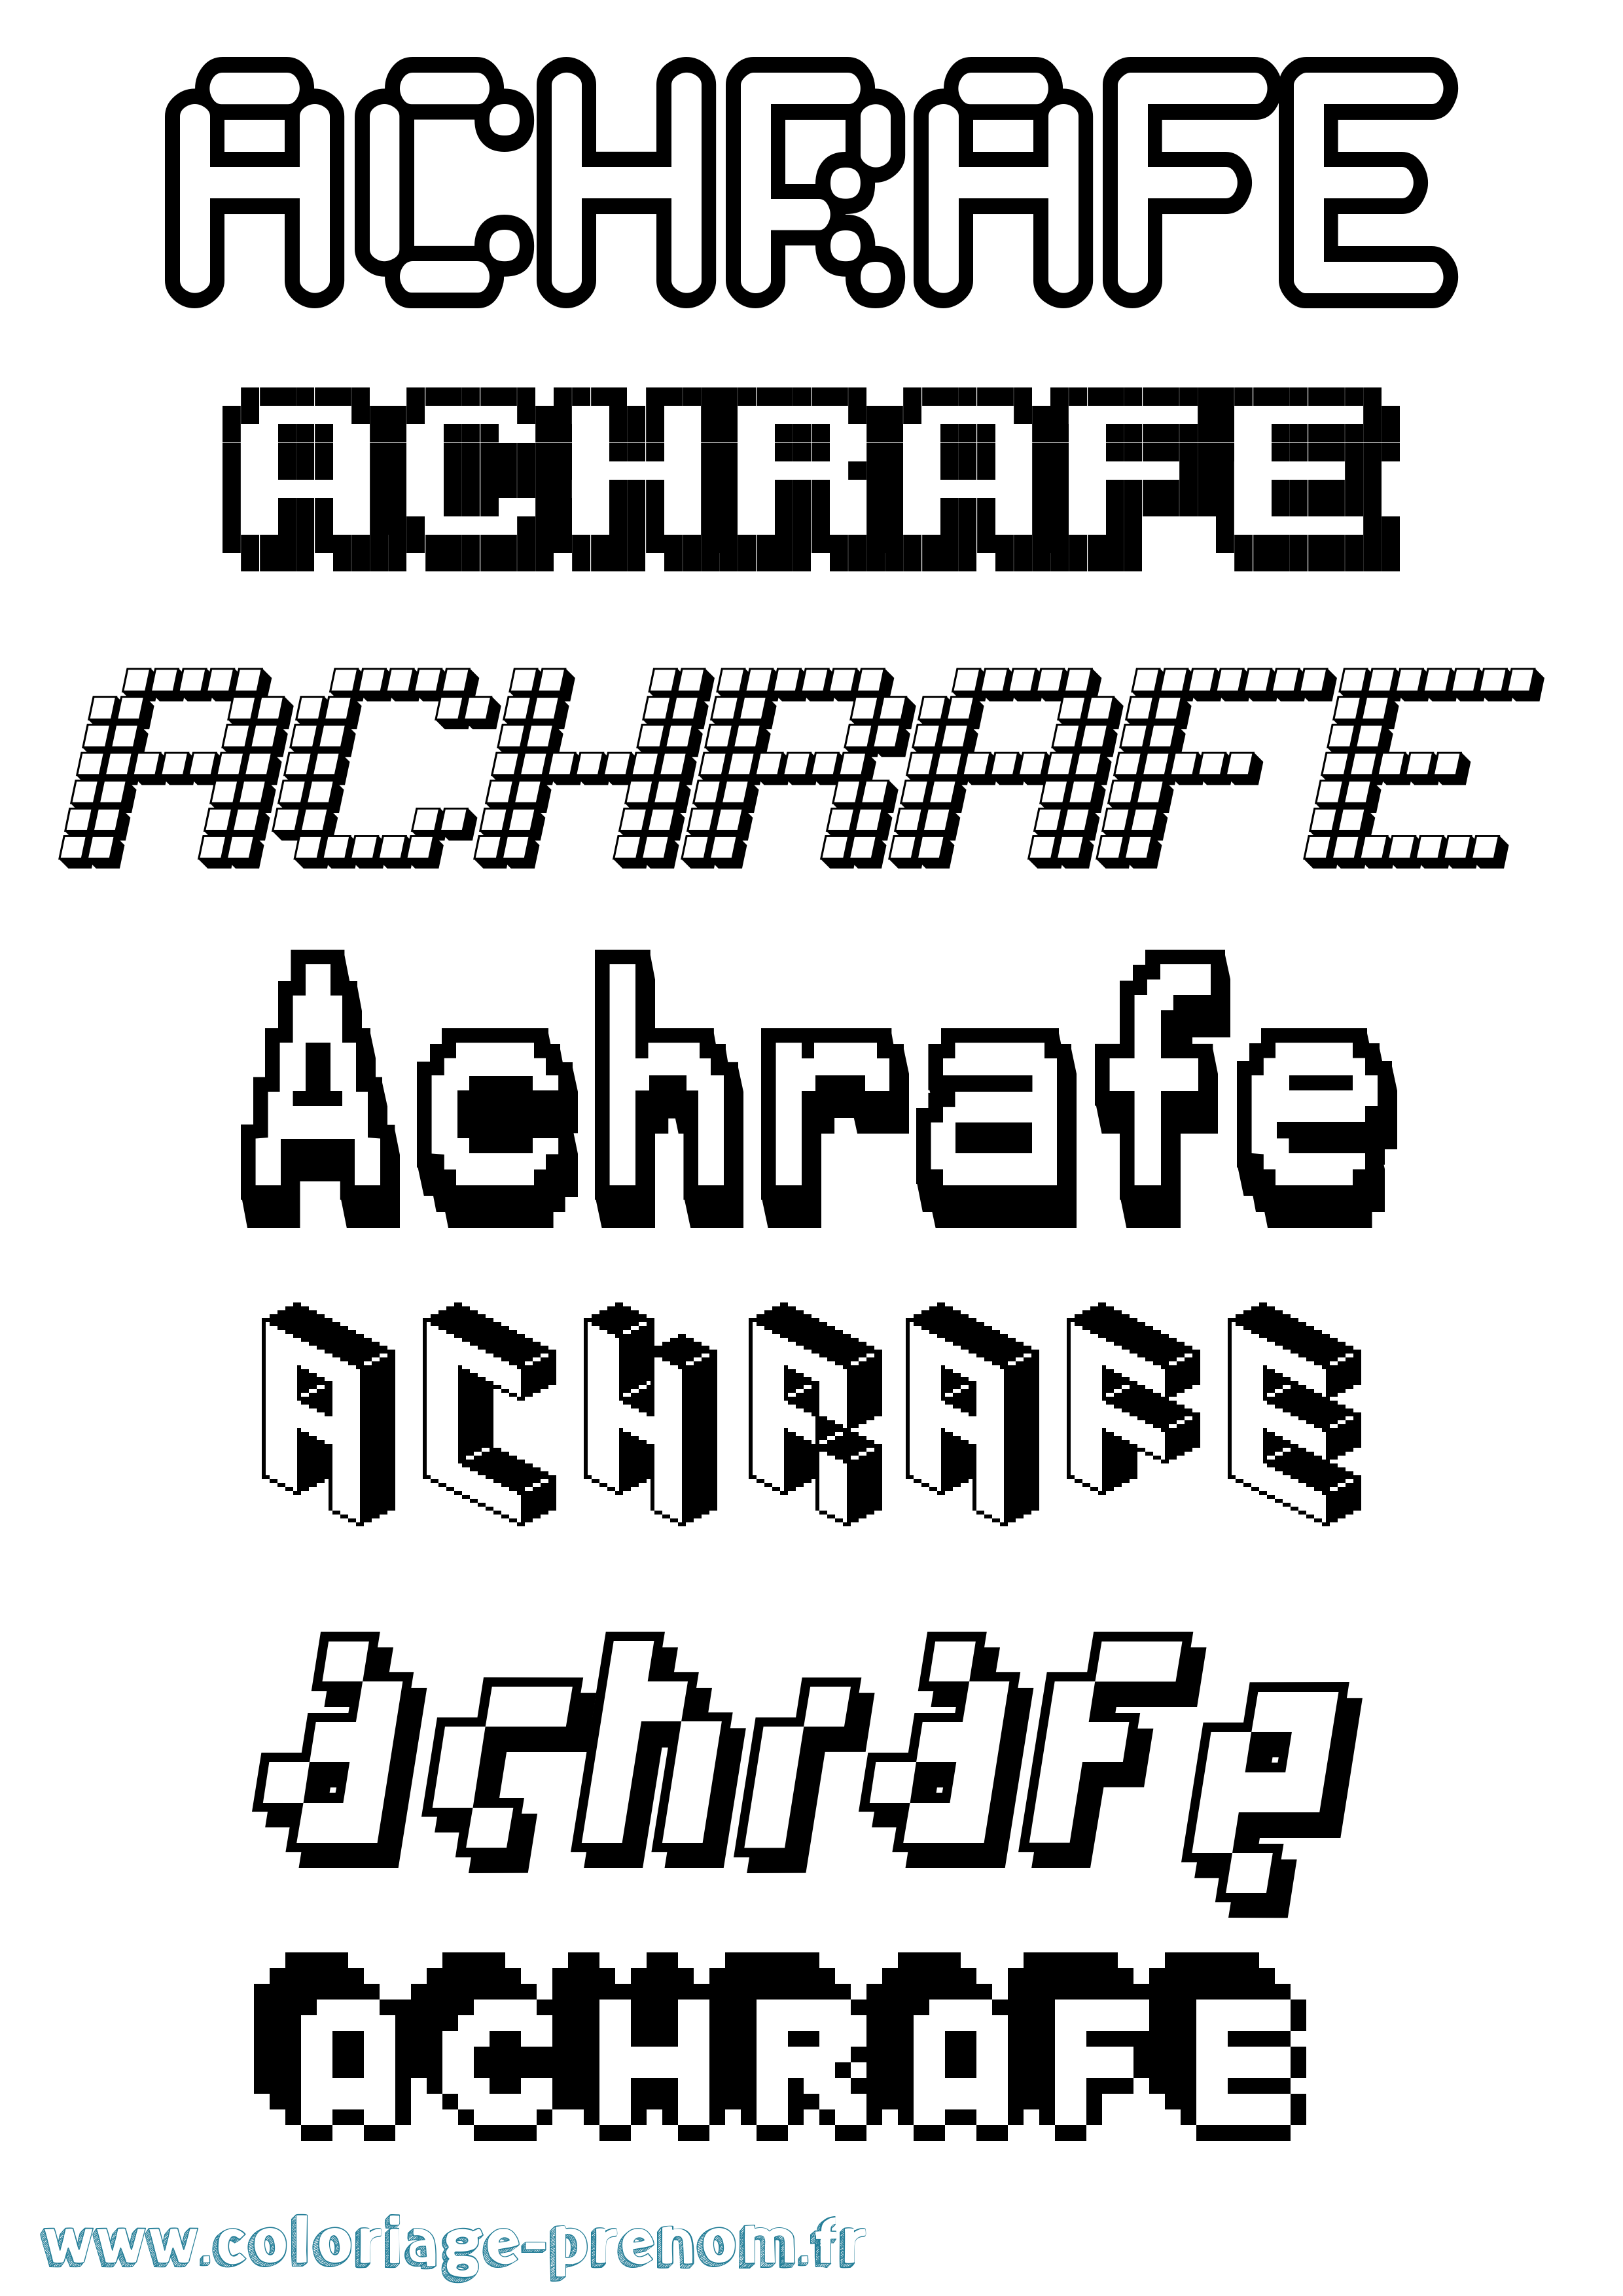 Coloriage prénom Achrafe Pixel